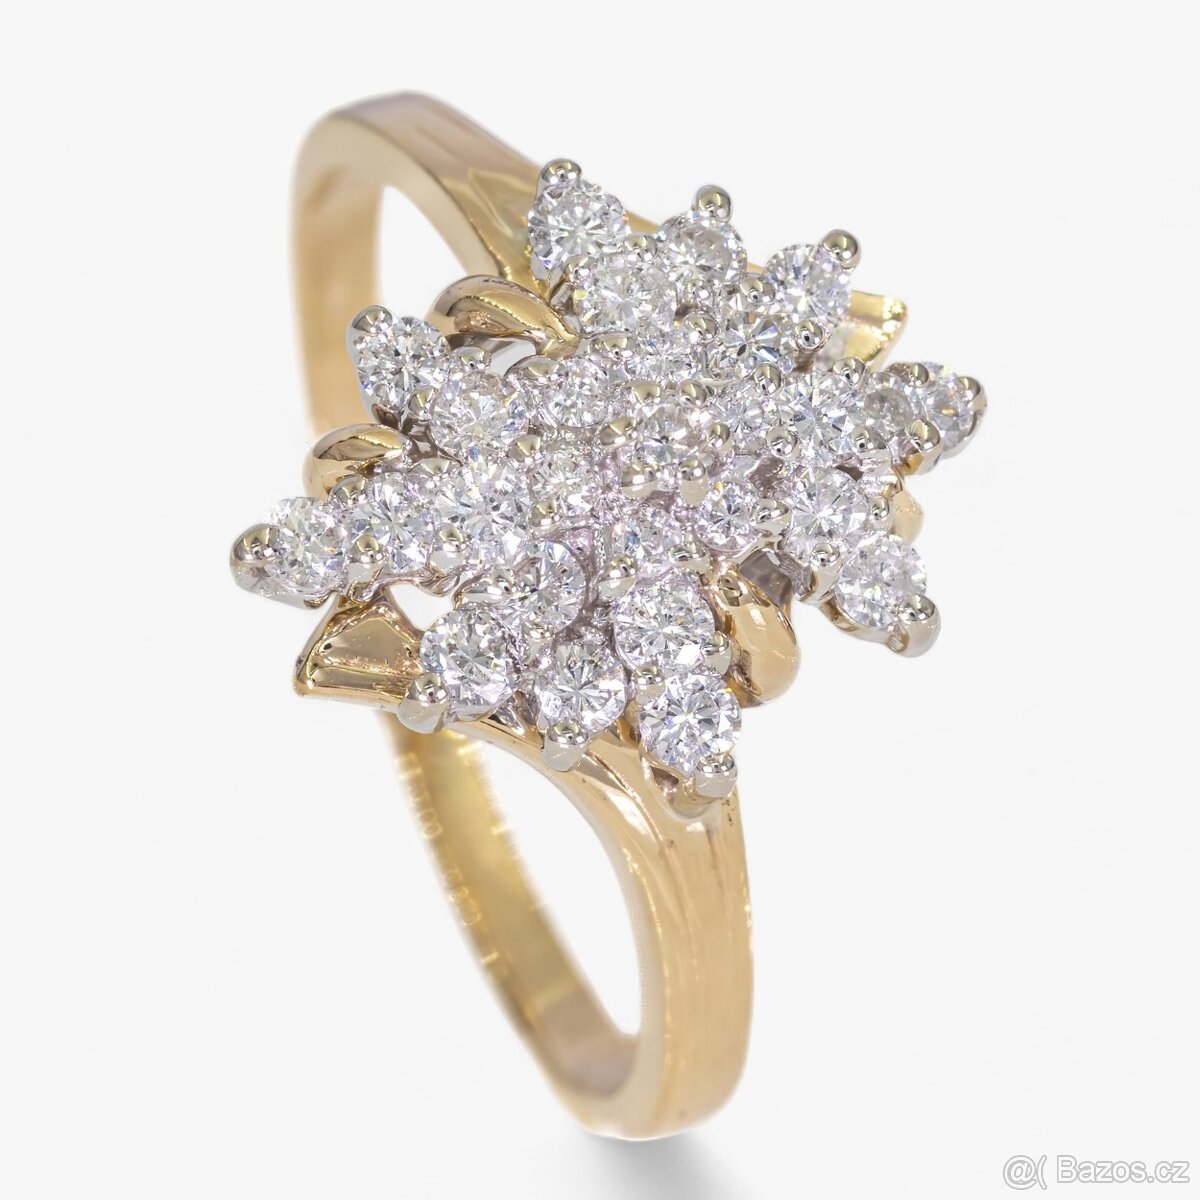 14K prsten s diamanty 0,50ct - Certifikát IGI